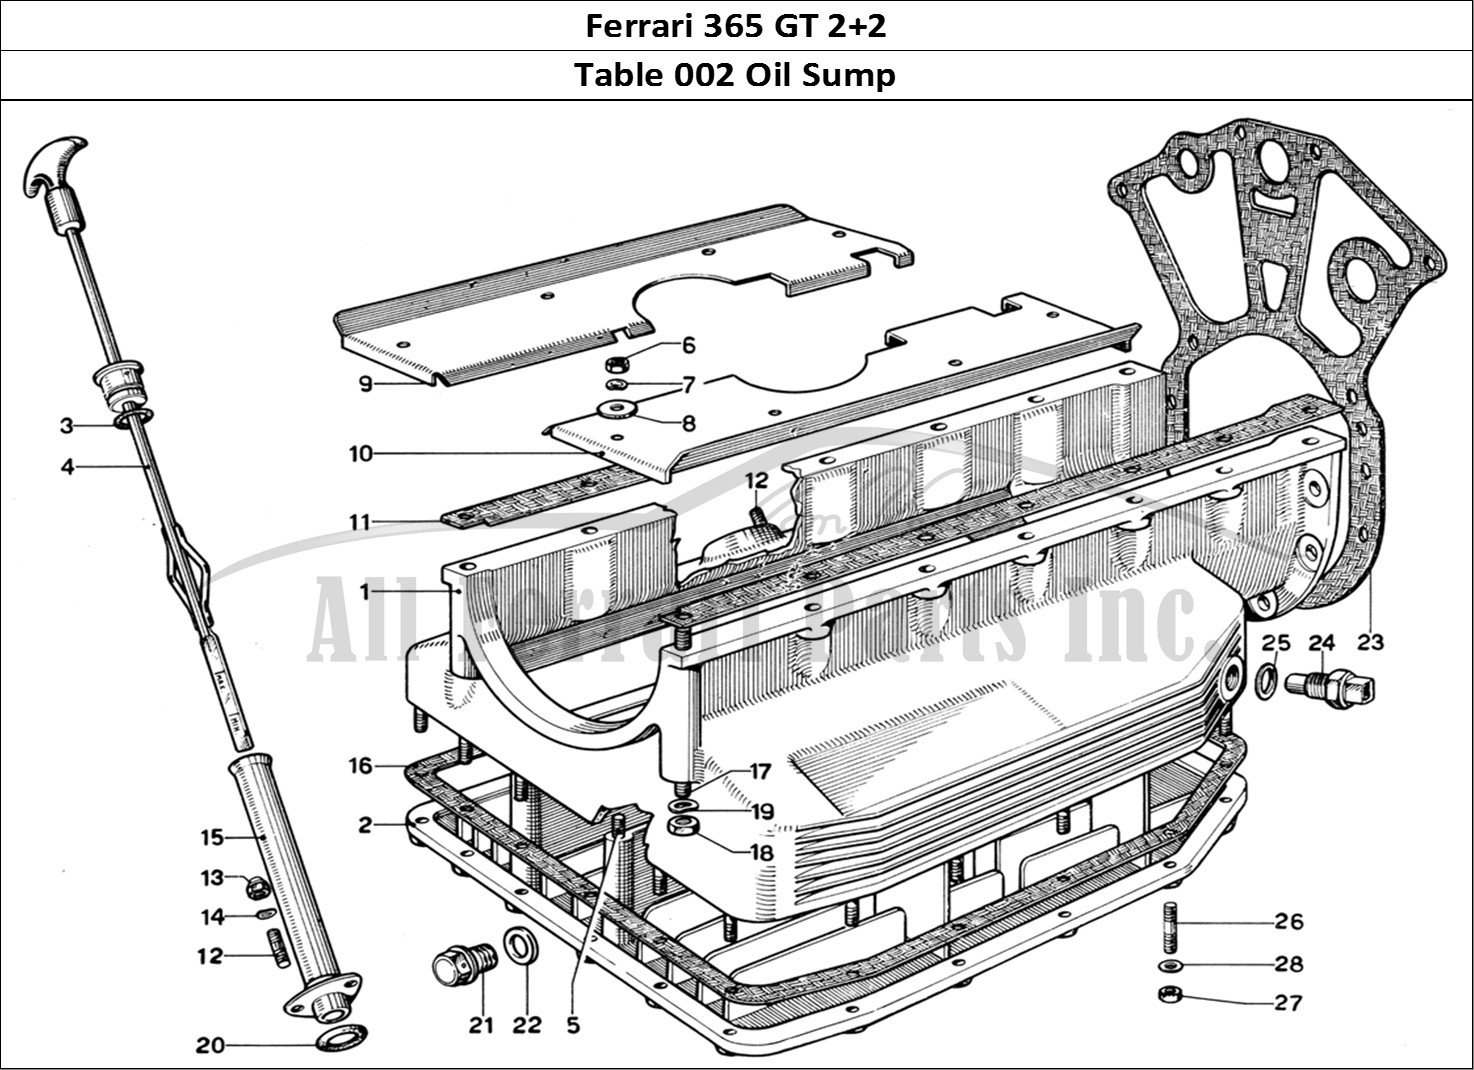 Ferrari Parts Ferrari 365 GT 2+2 (Mechanical) Page 002 Oil Sump